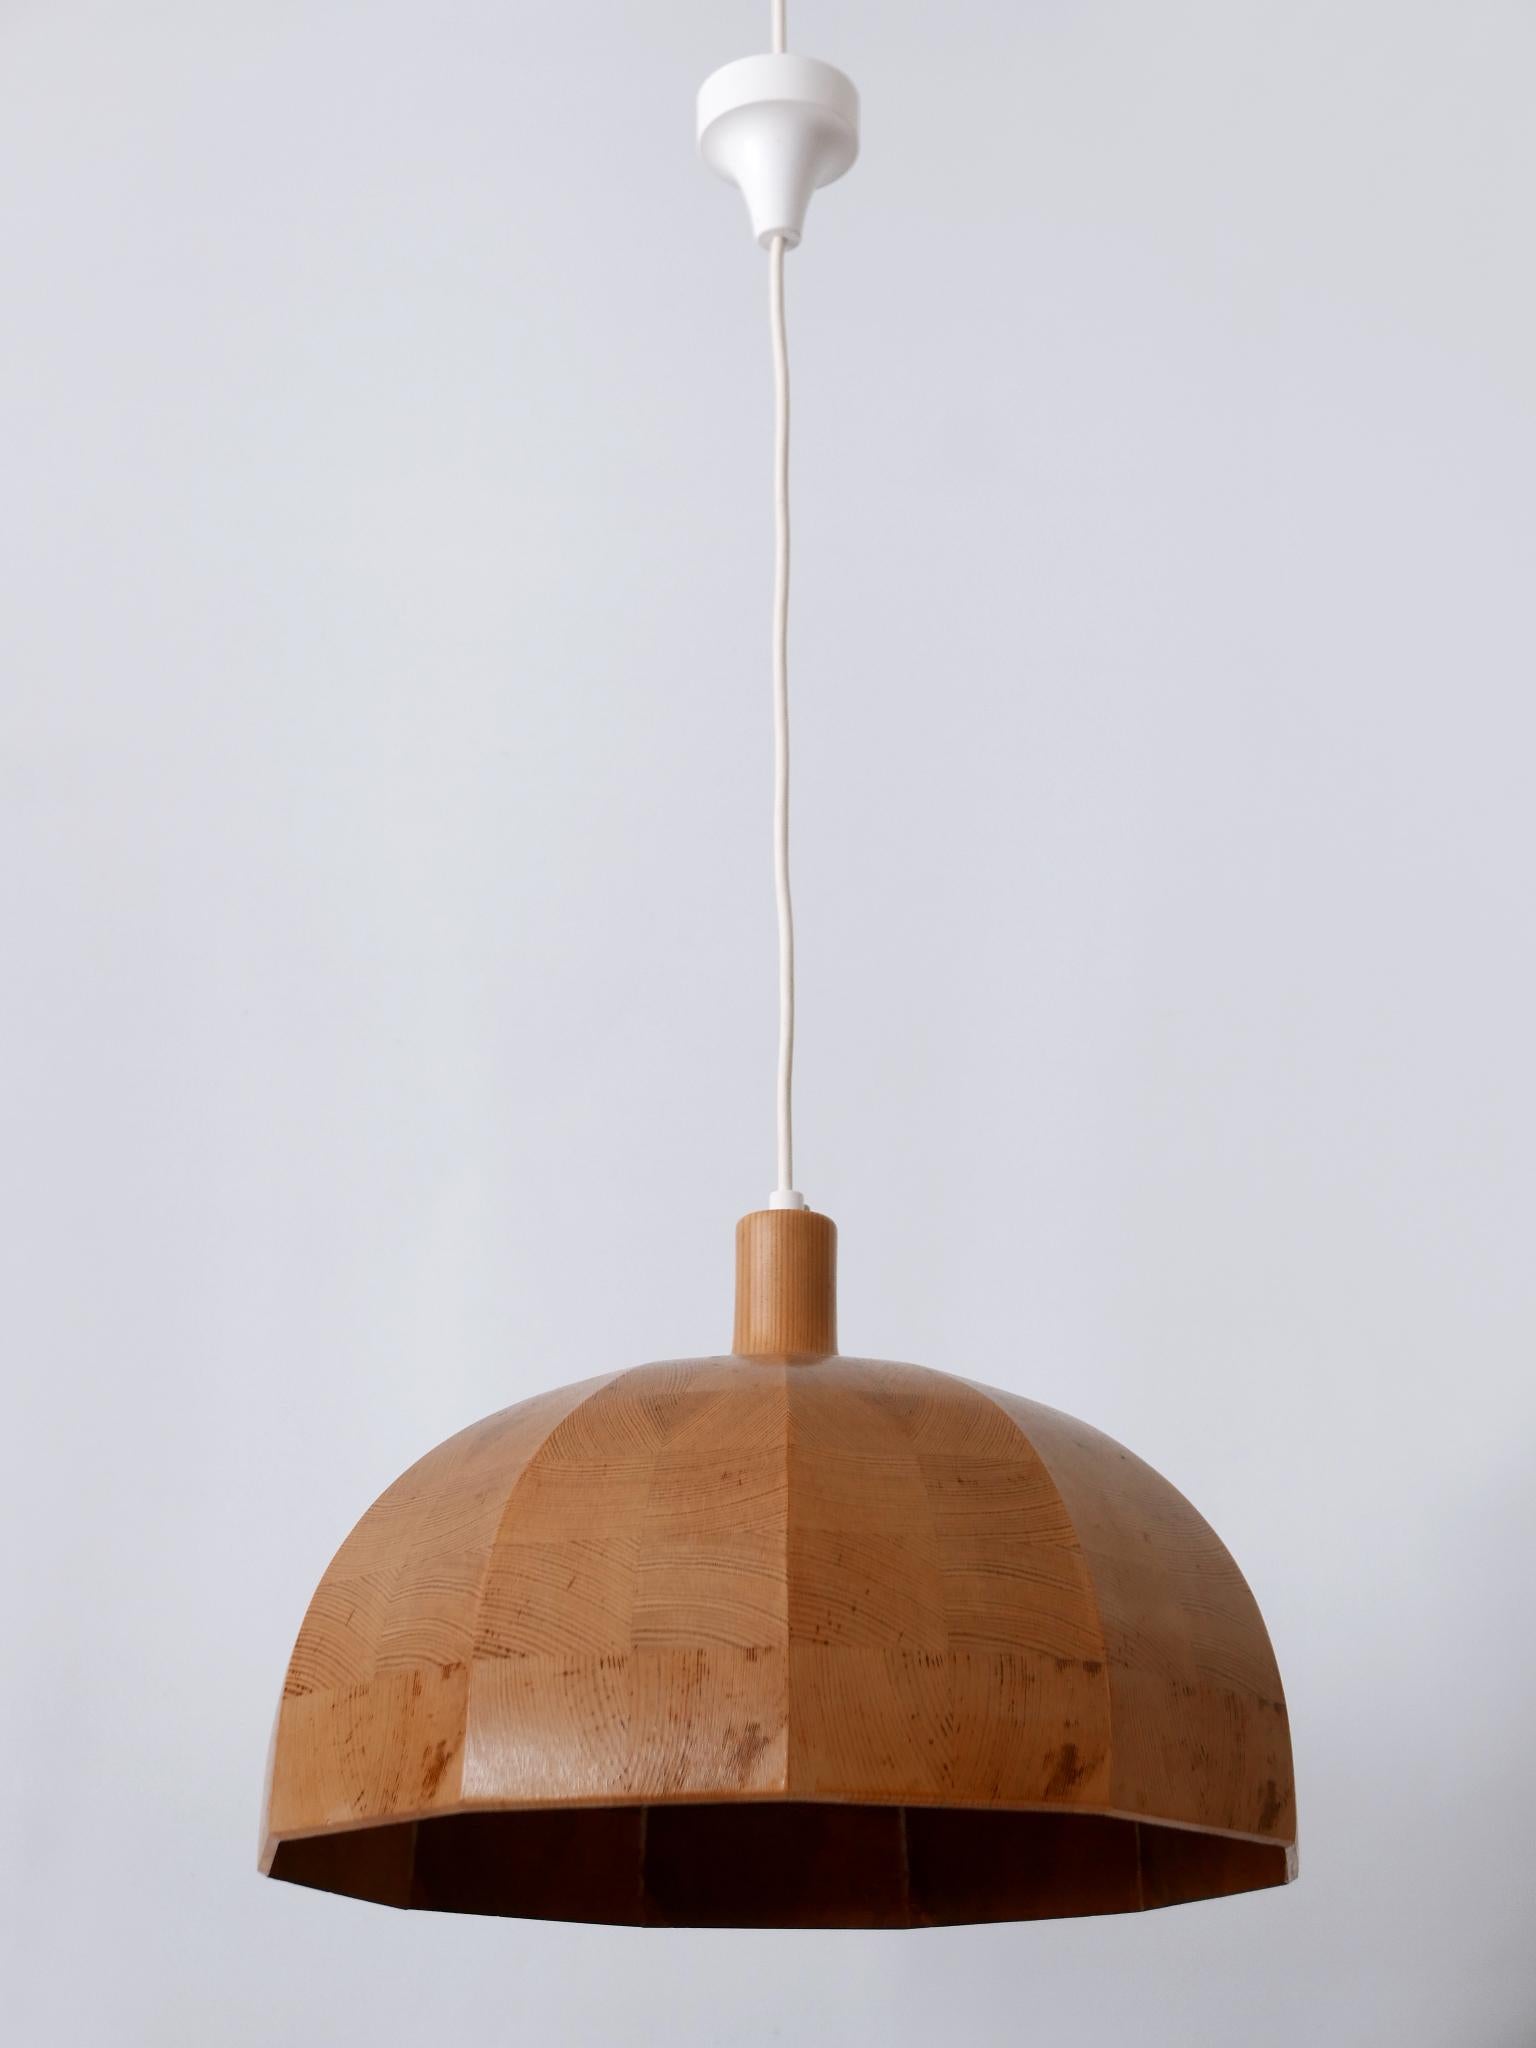 Rare Mid-Century Modern Pine Wood Pendant Lamp or Hanging Light Sweden, 1960s For Sale 8